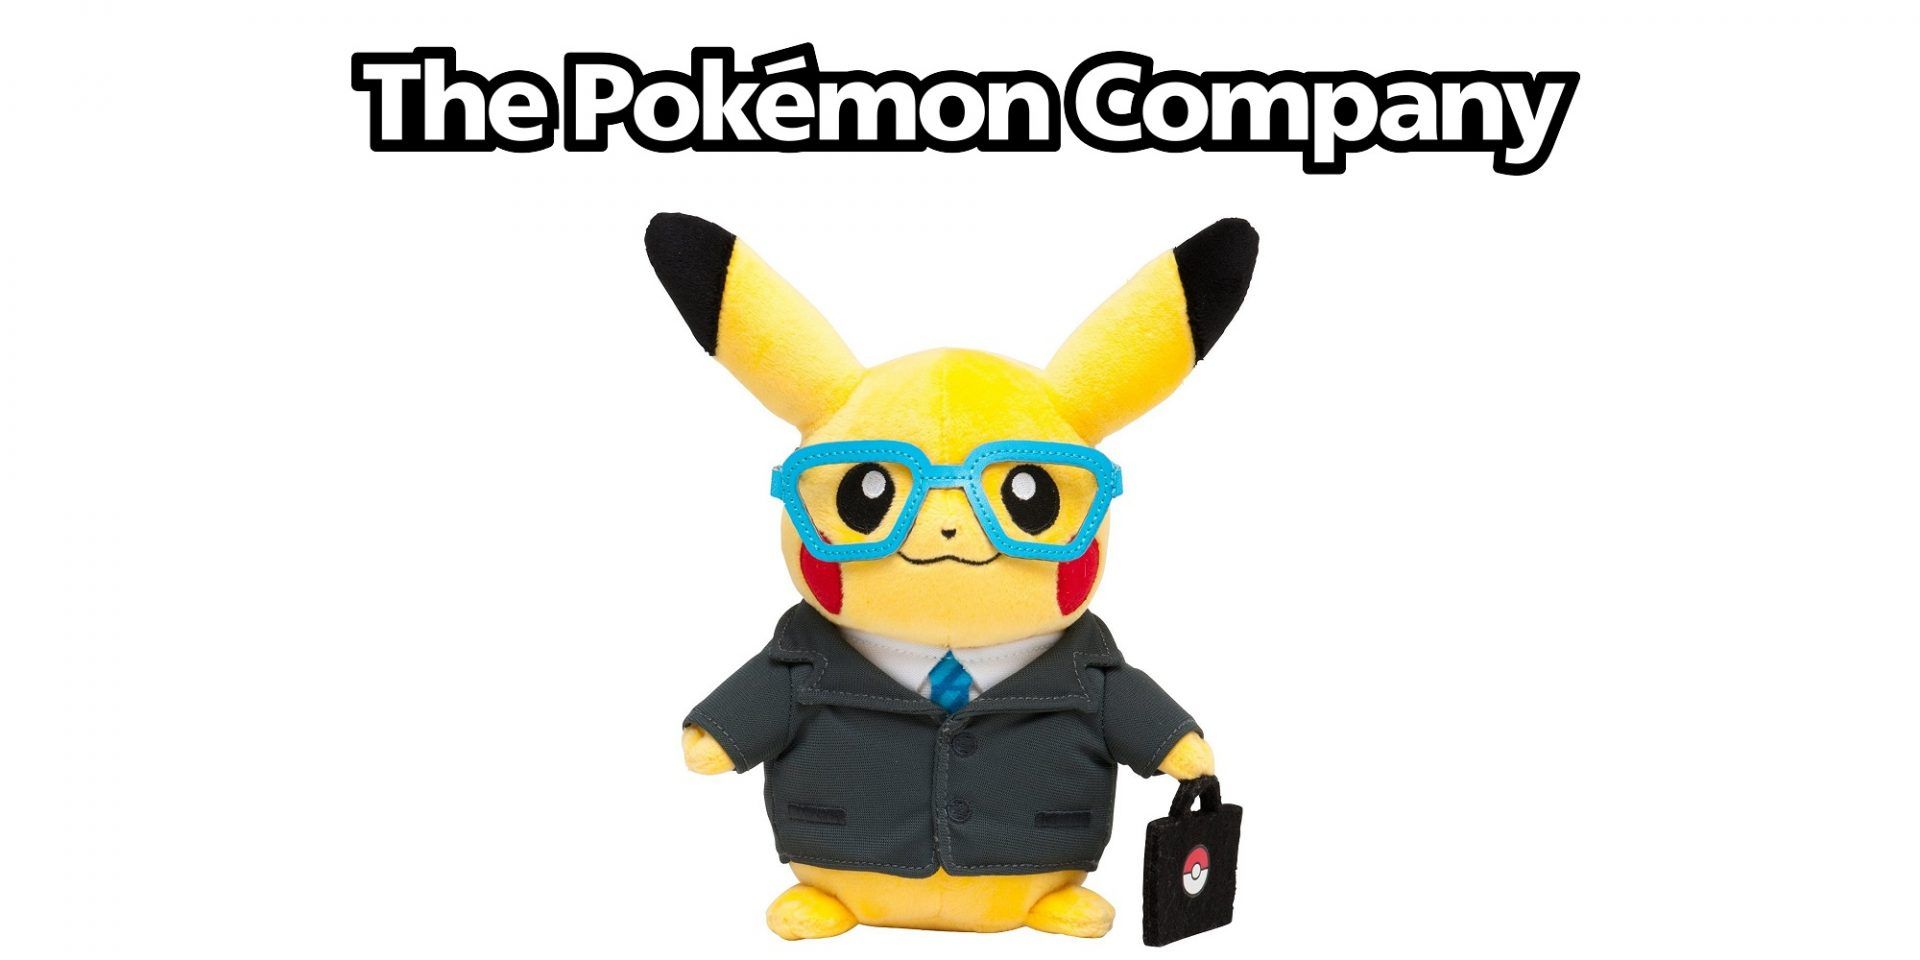 Pikachu Dressed As A Lawyer Stuffed Toy Under The Pokemon Company